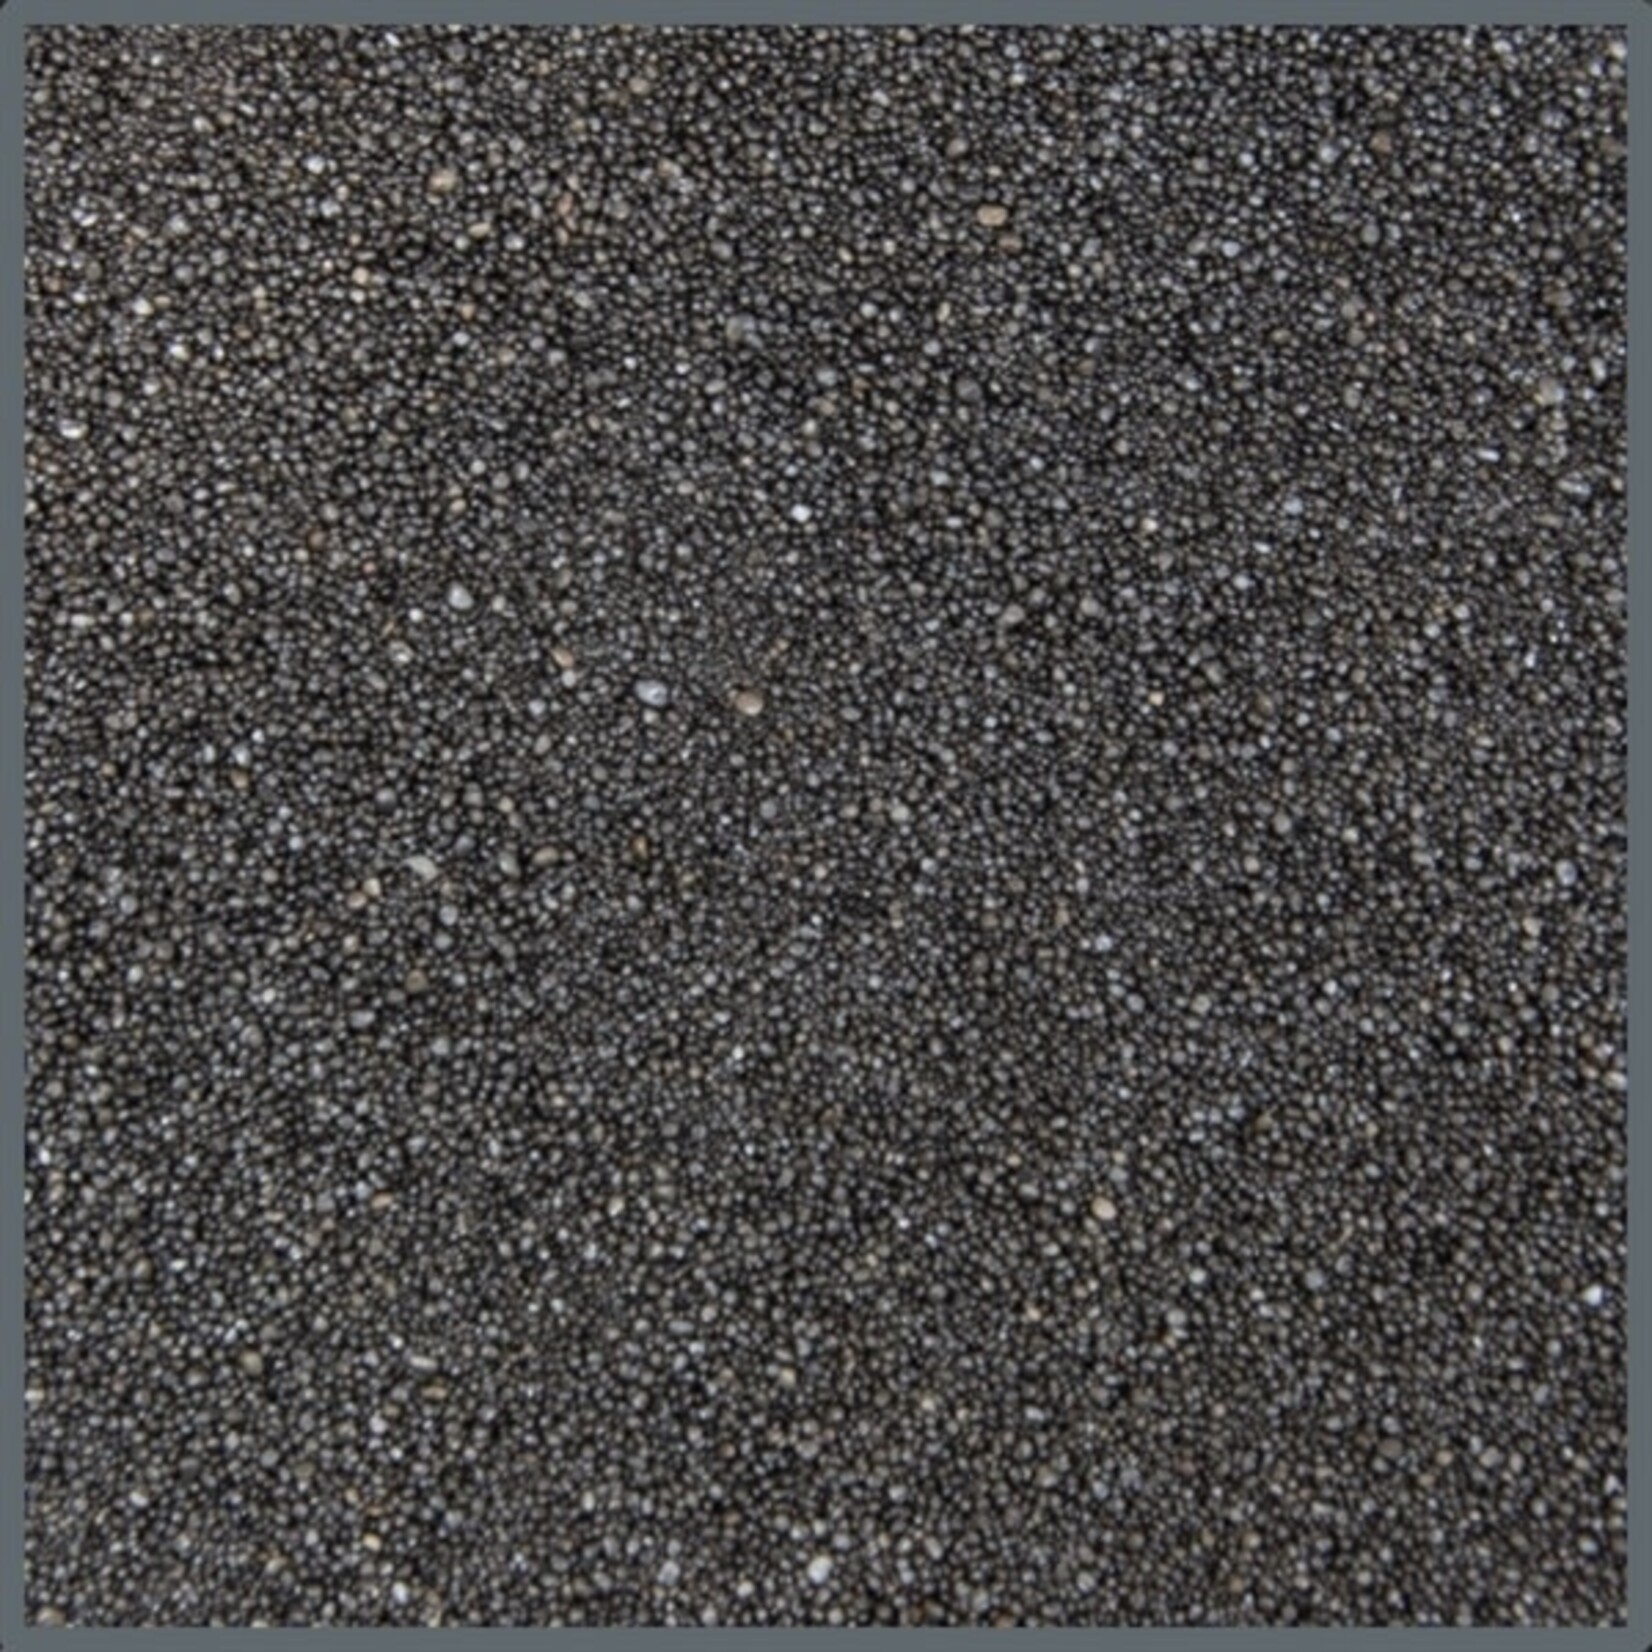 Dupla Ground colour black star 0.5-1.4 mm 10 kg